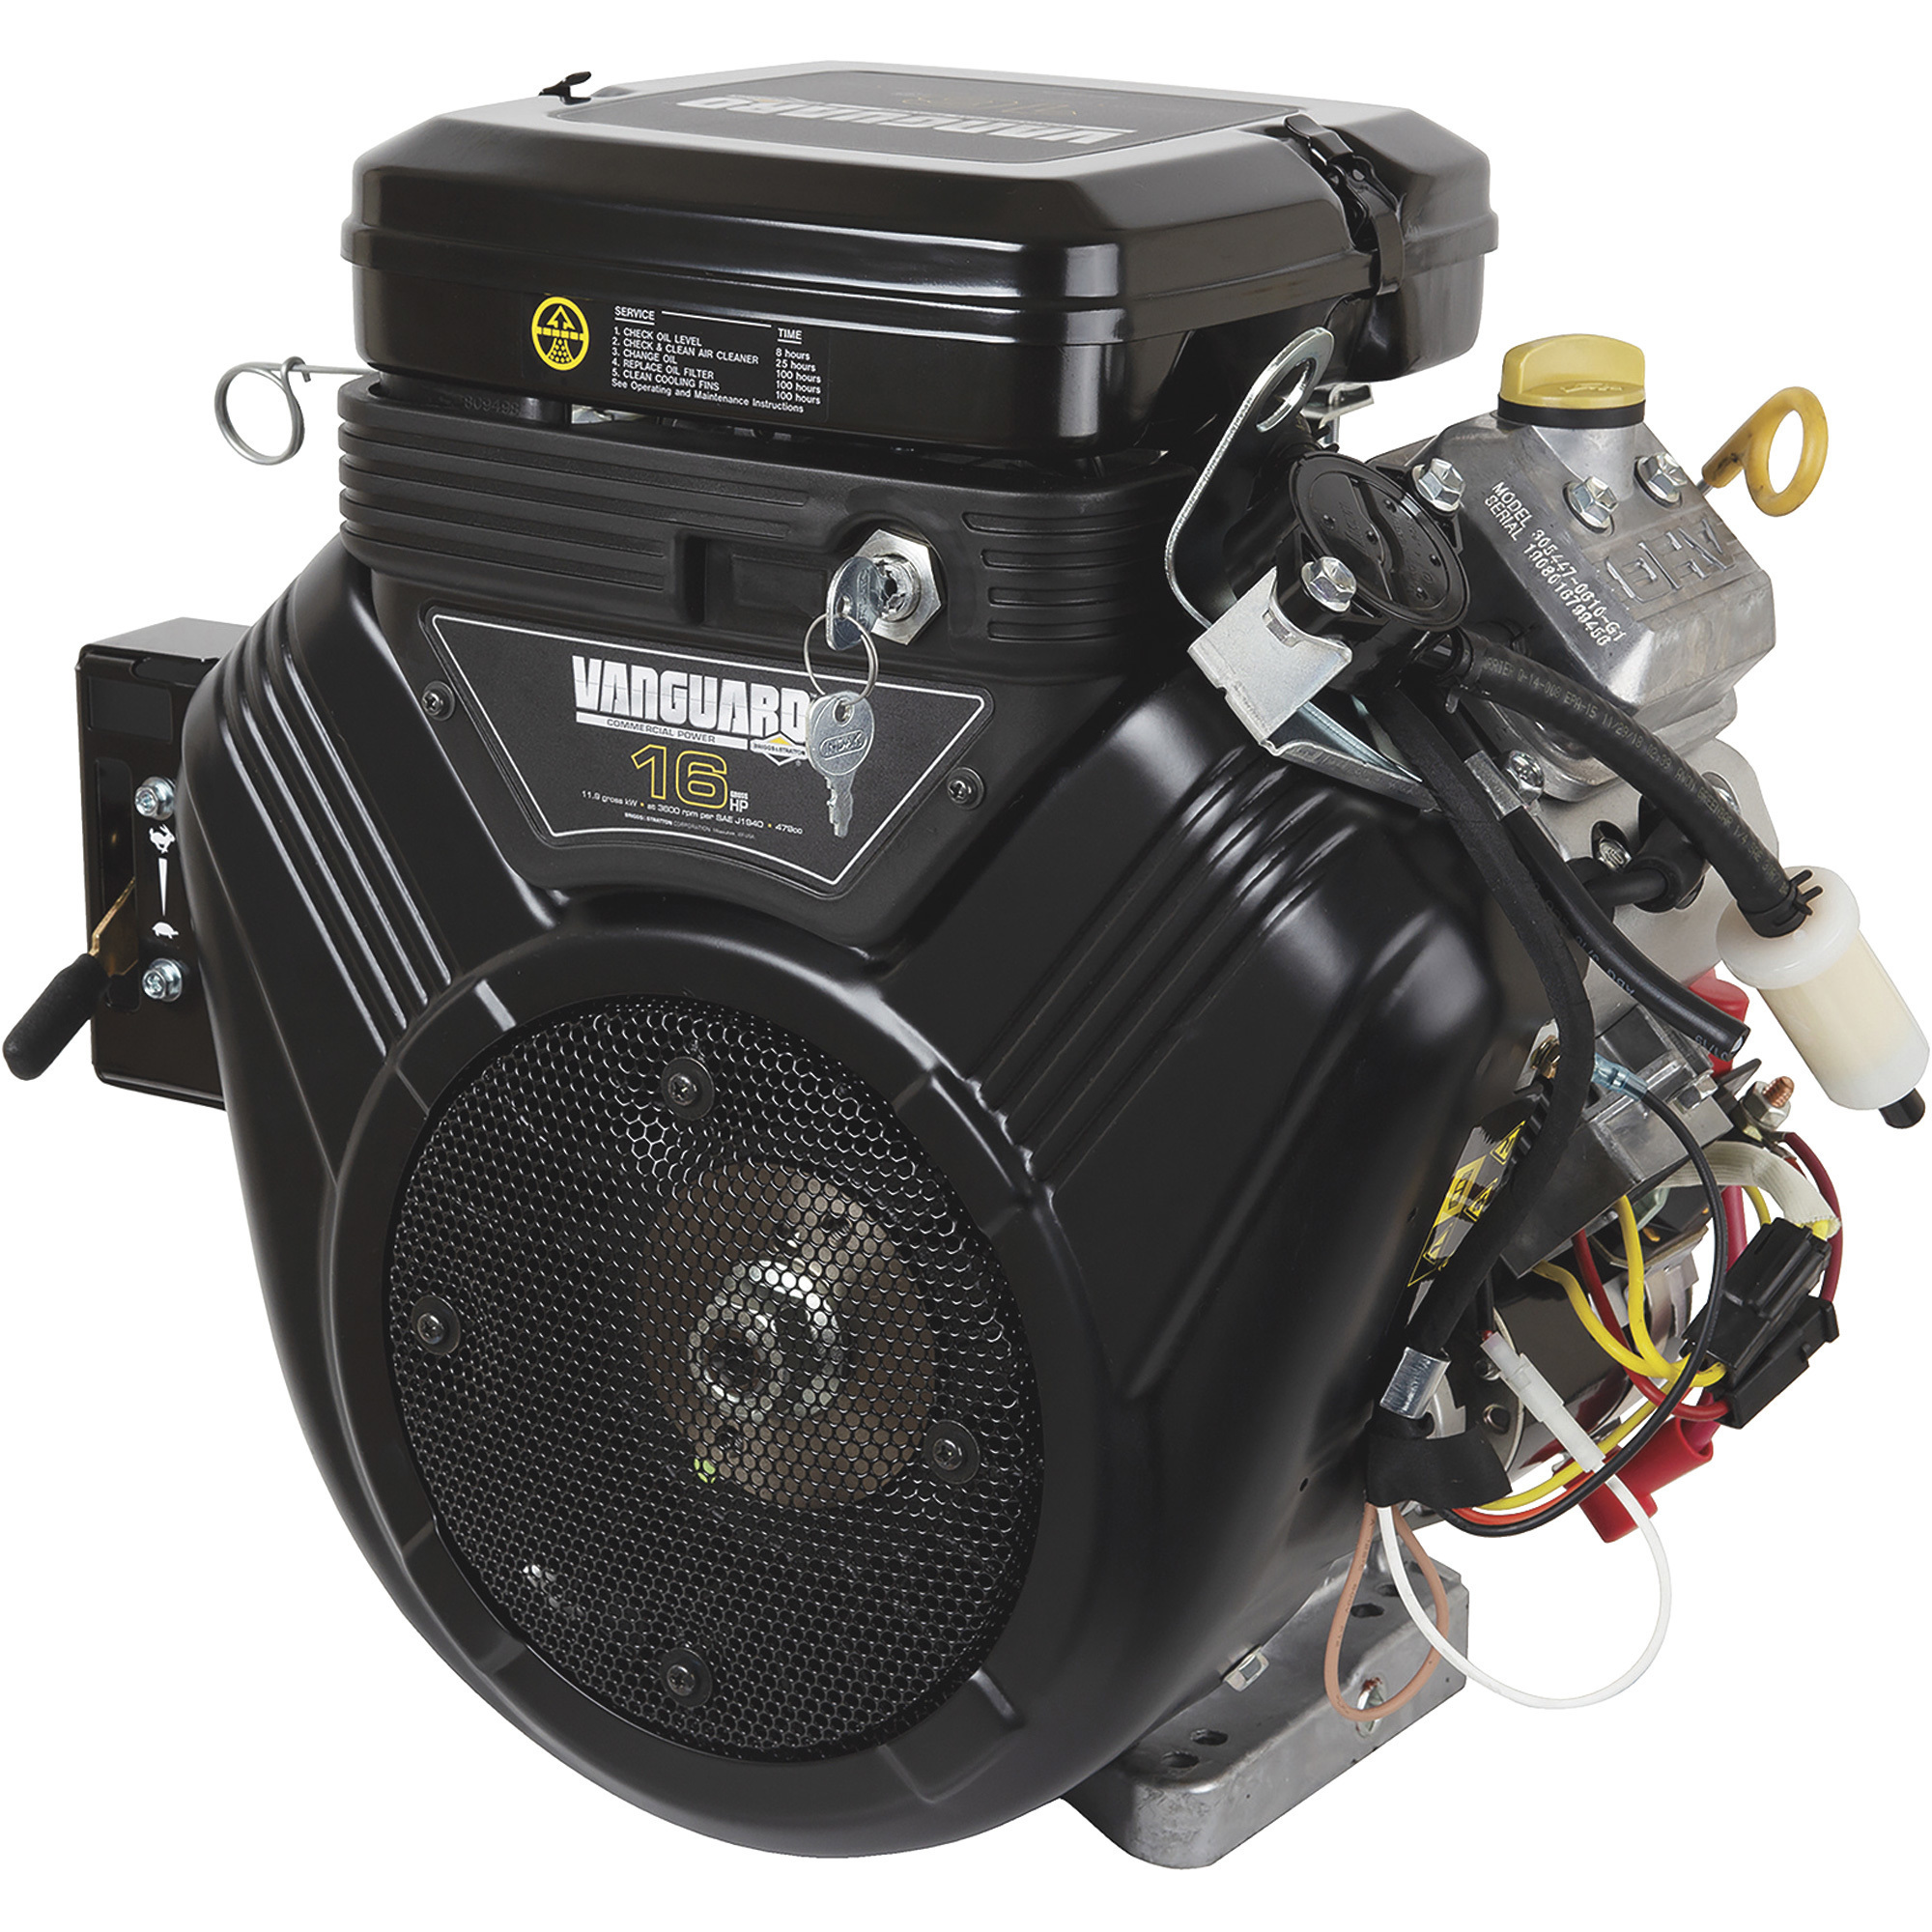 Briggs & Stratton Vanguard V-Twin 479cc Horizontal Engine with Electric Start â 16 HP, Model 305447-0610-G1